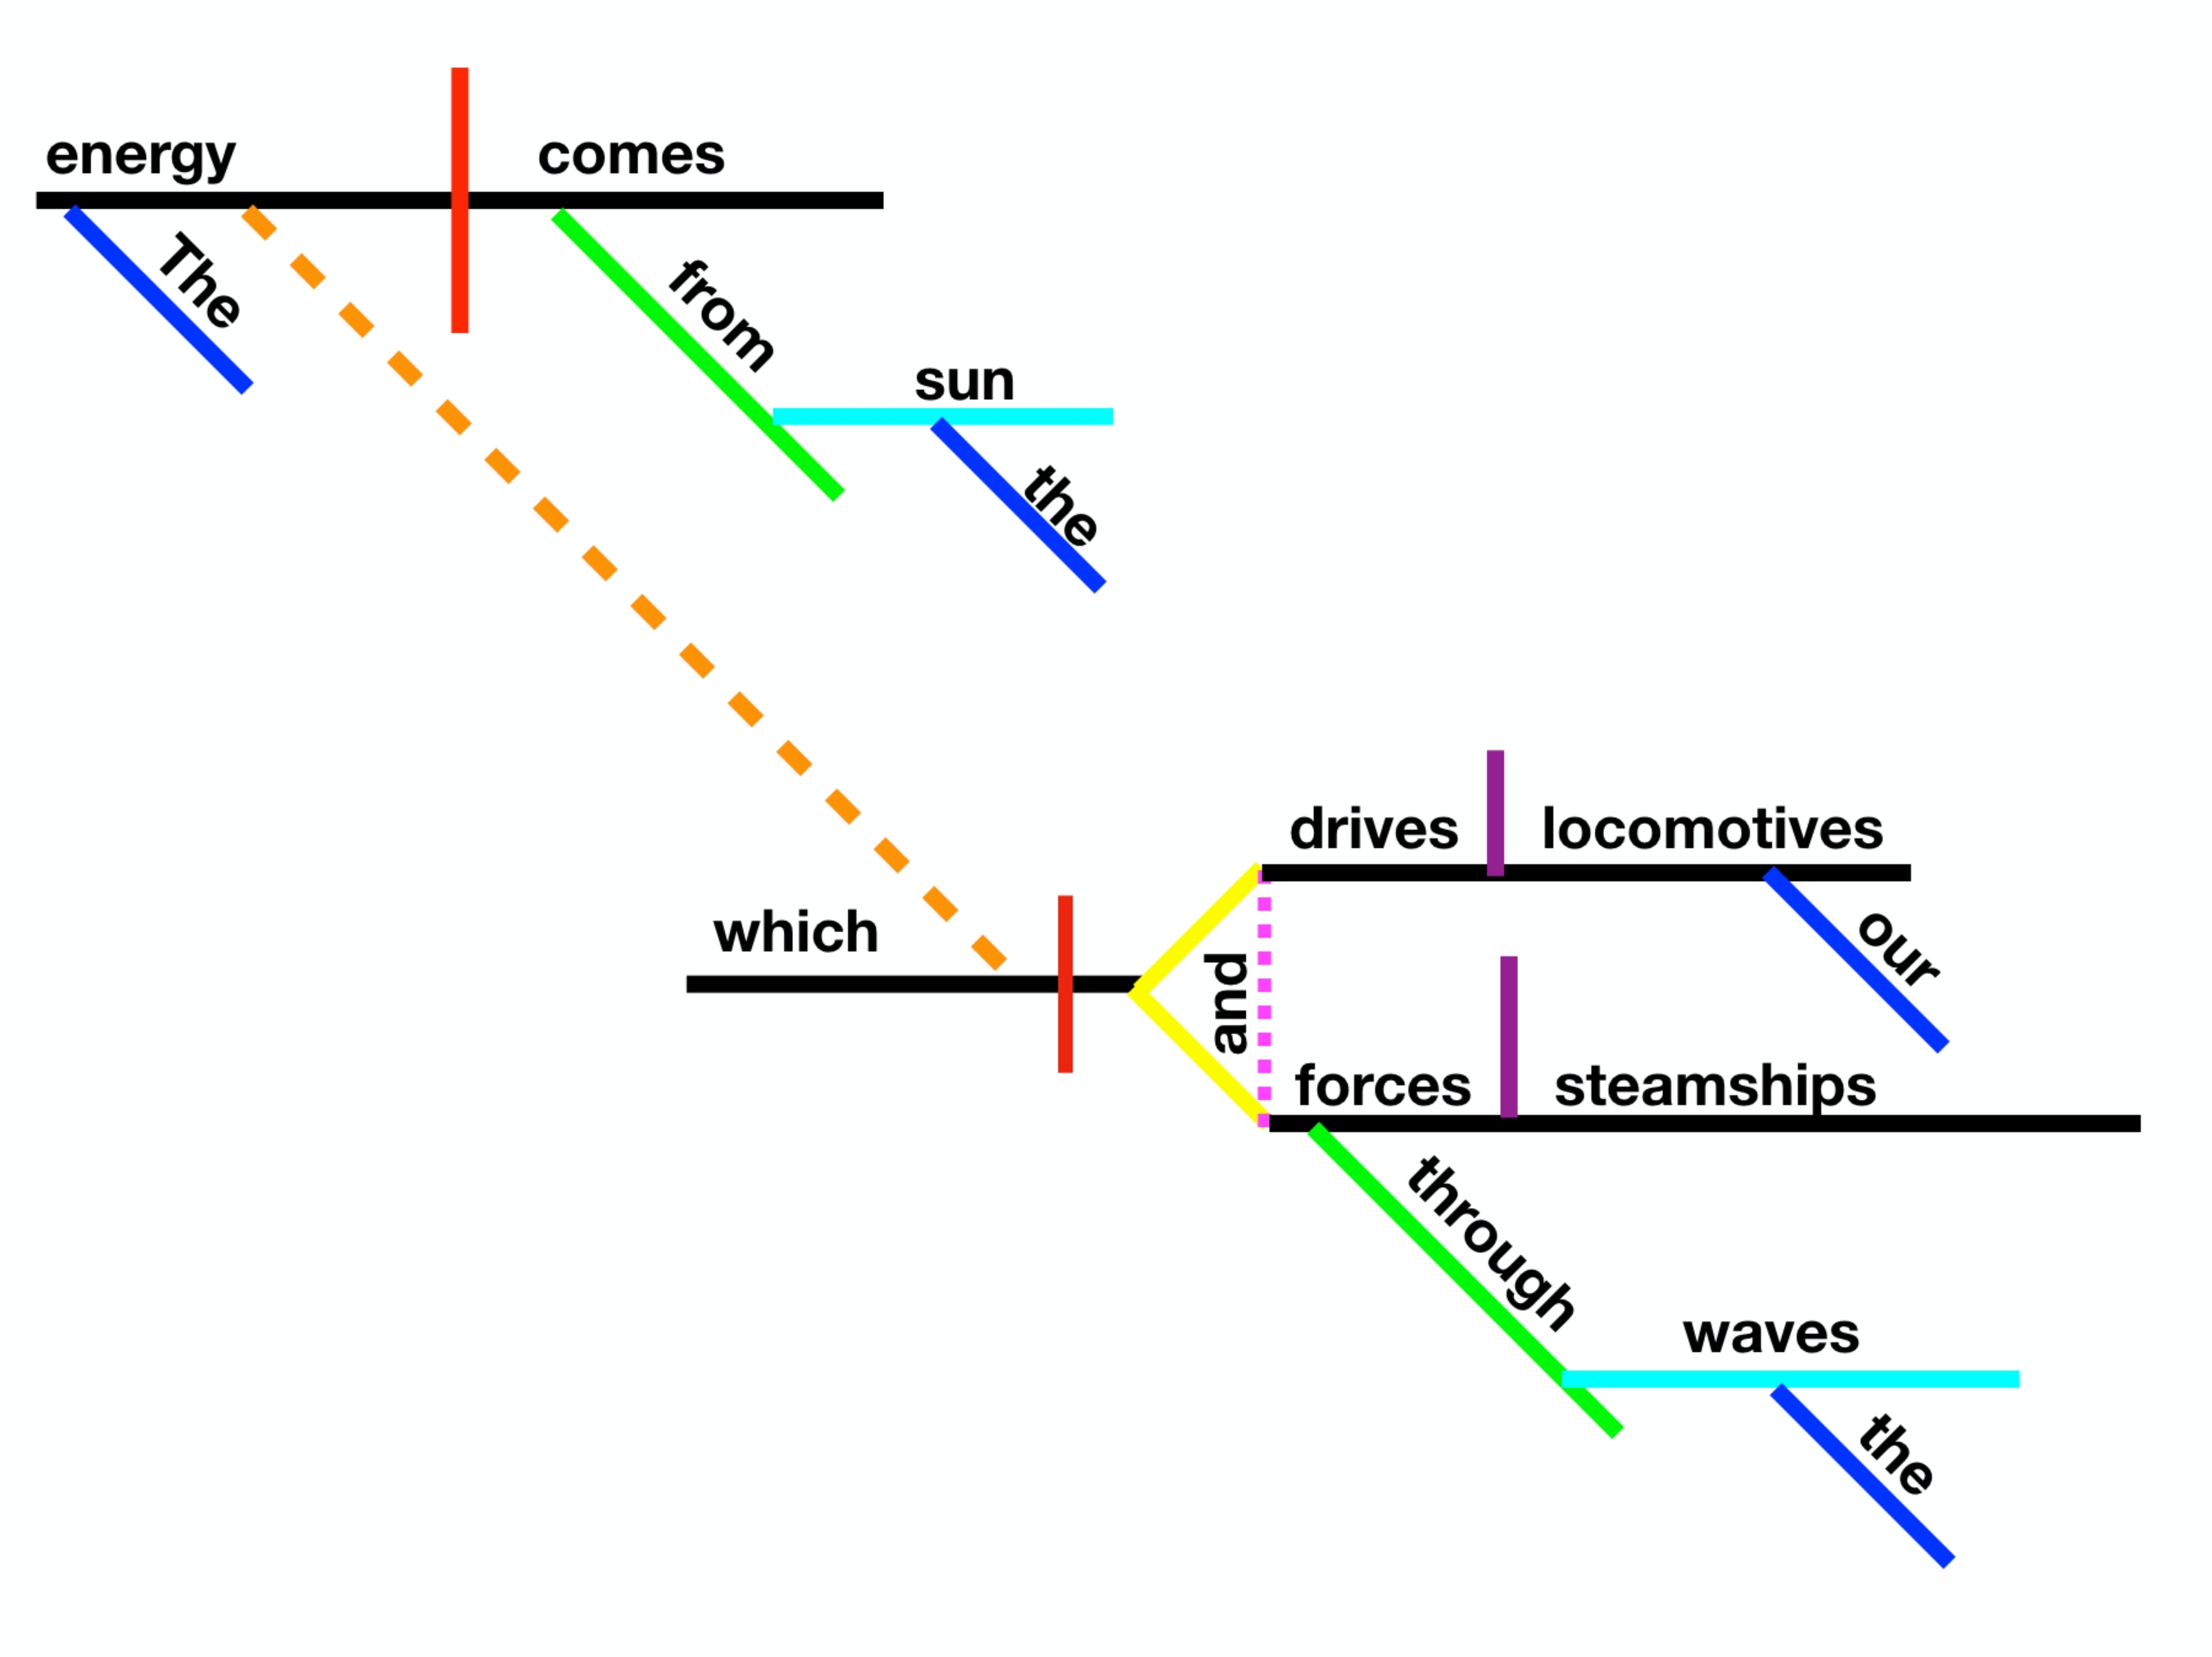 Sentence Diagram